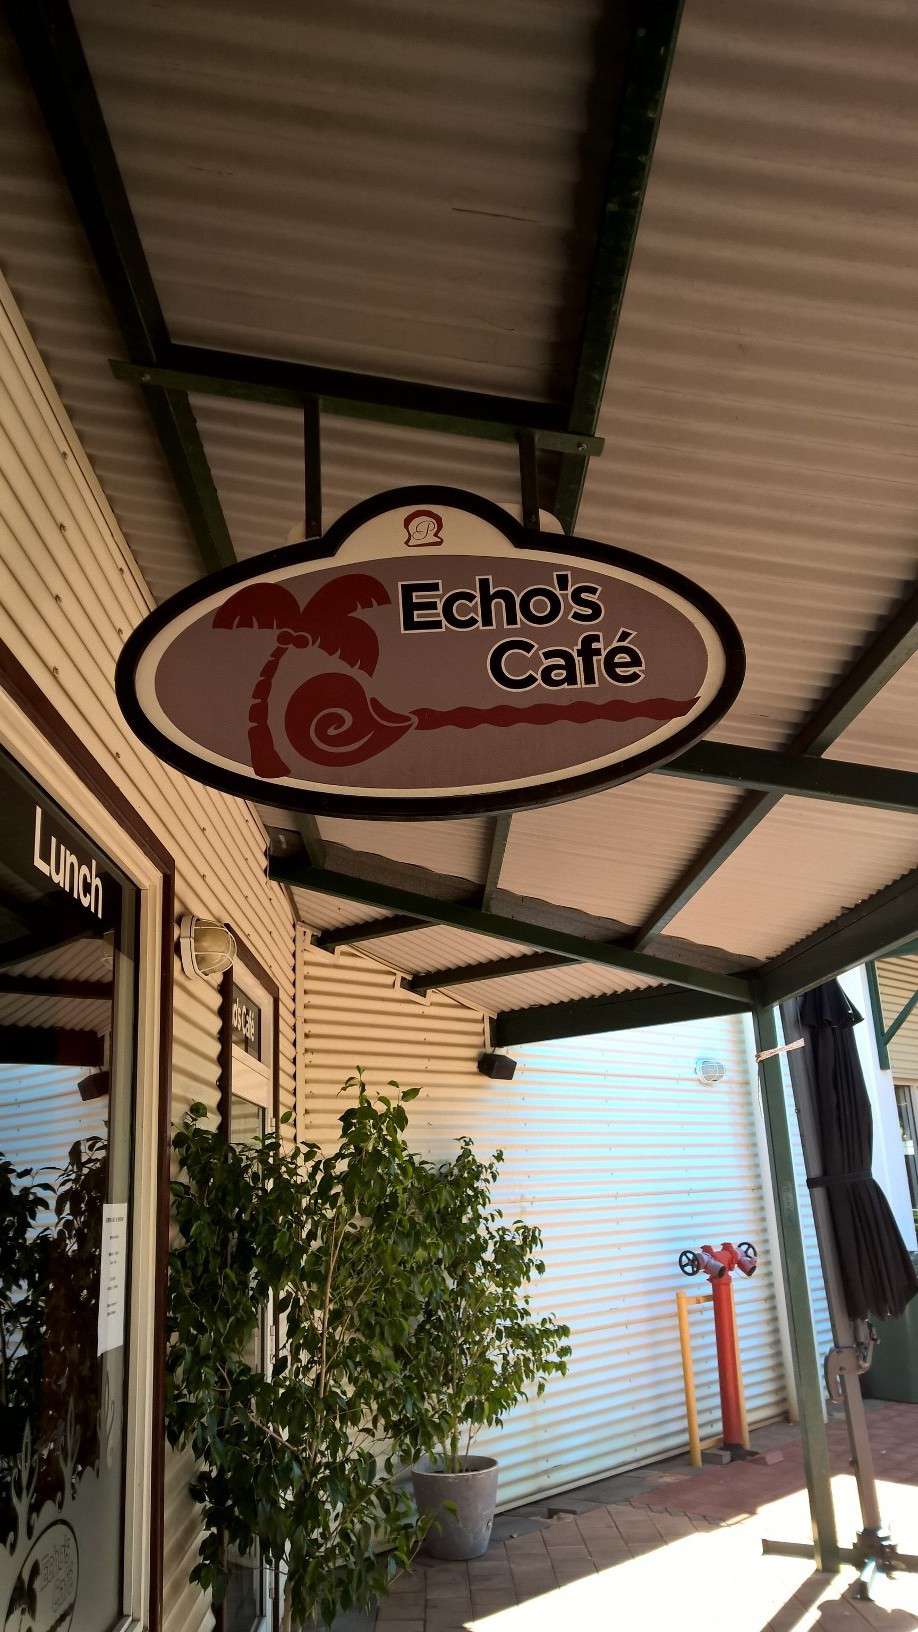 Echo's Cafe